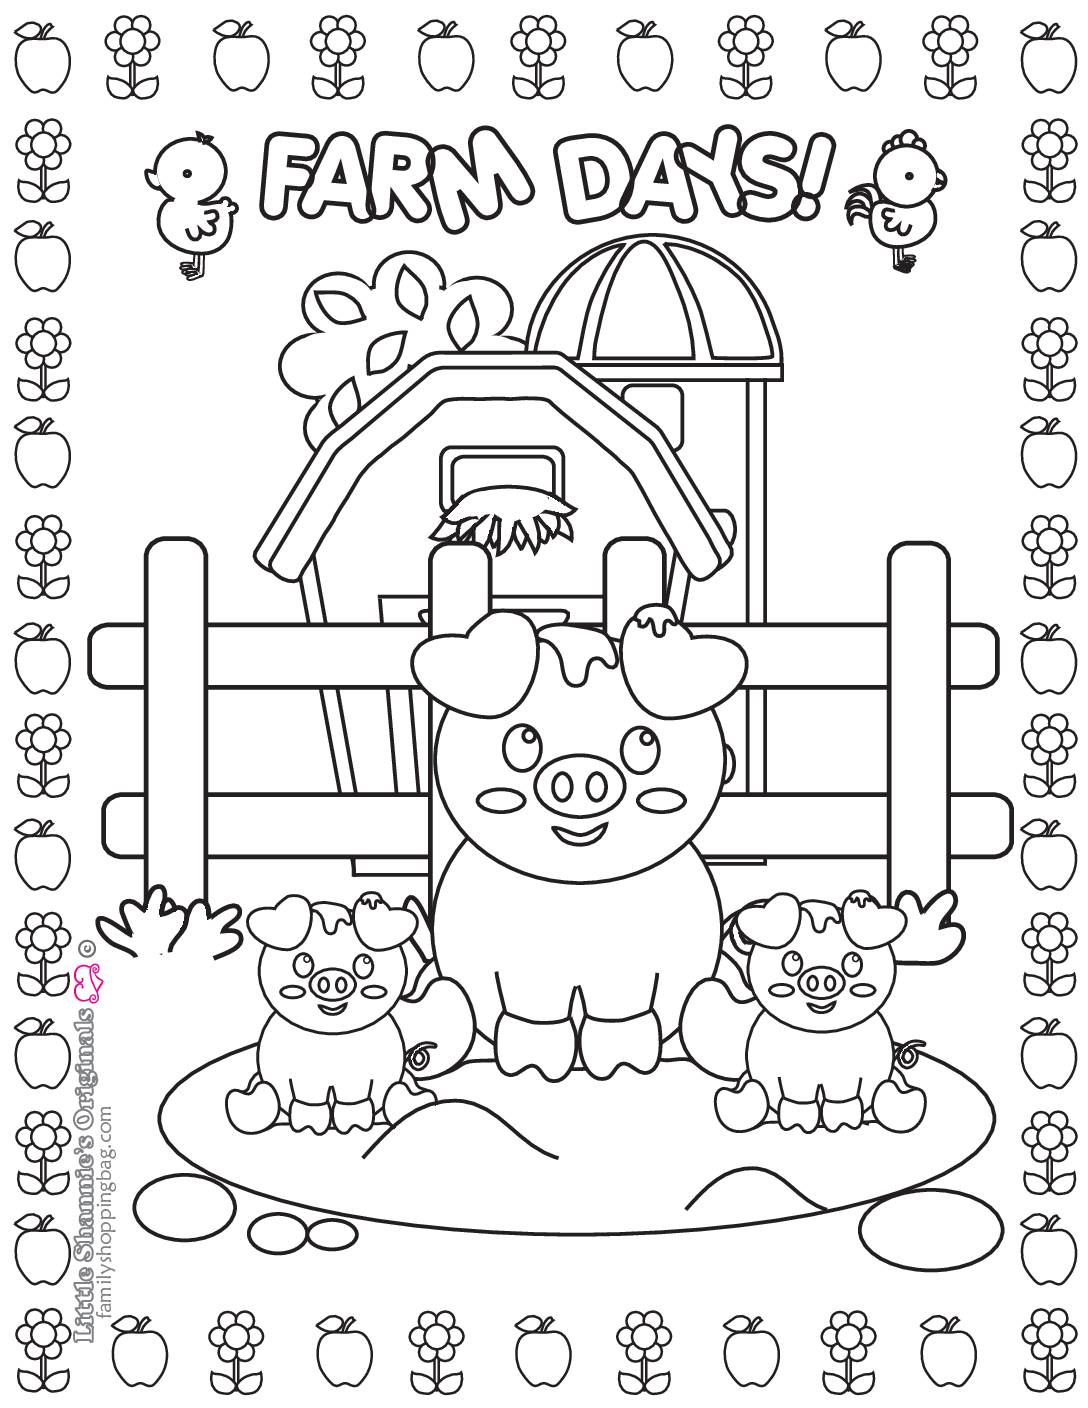 Coloring page farm